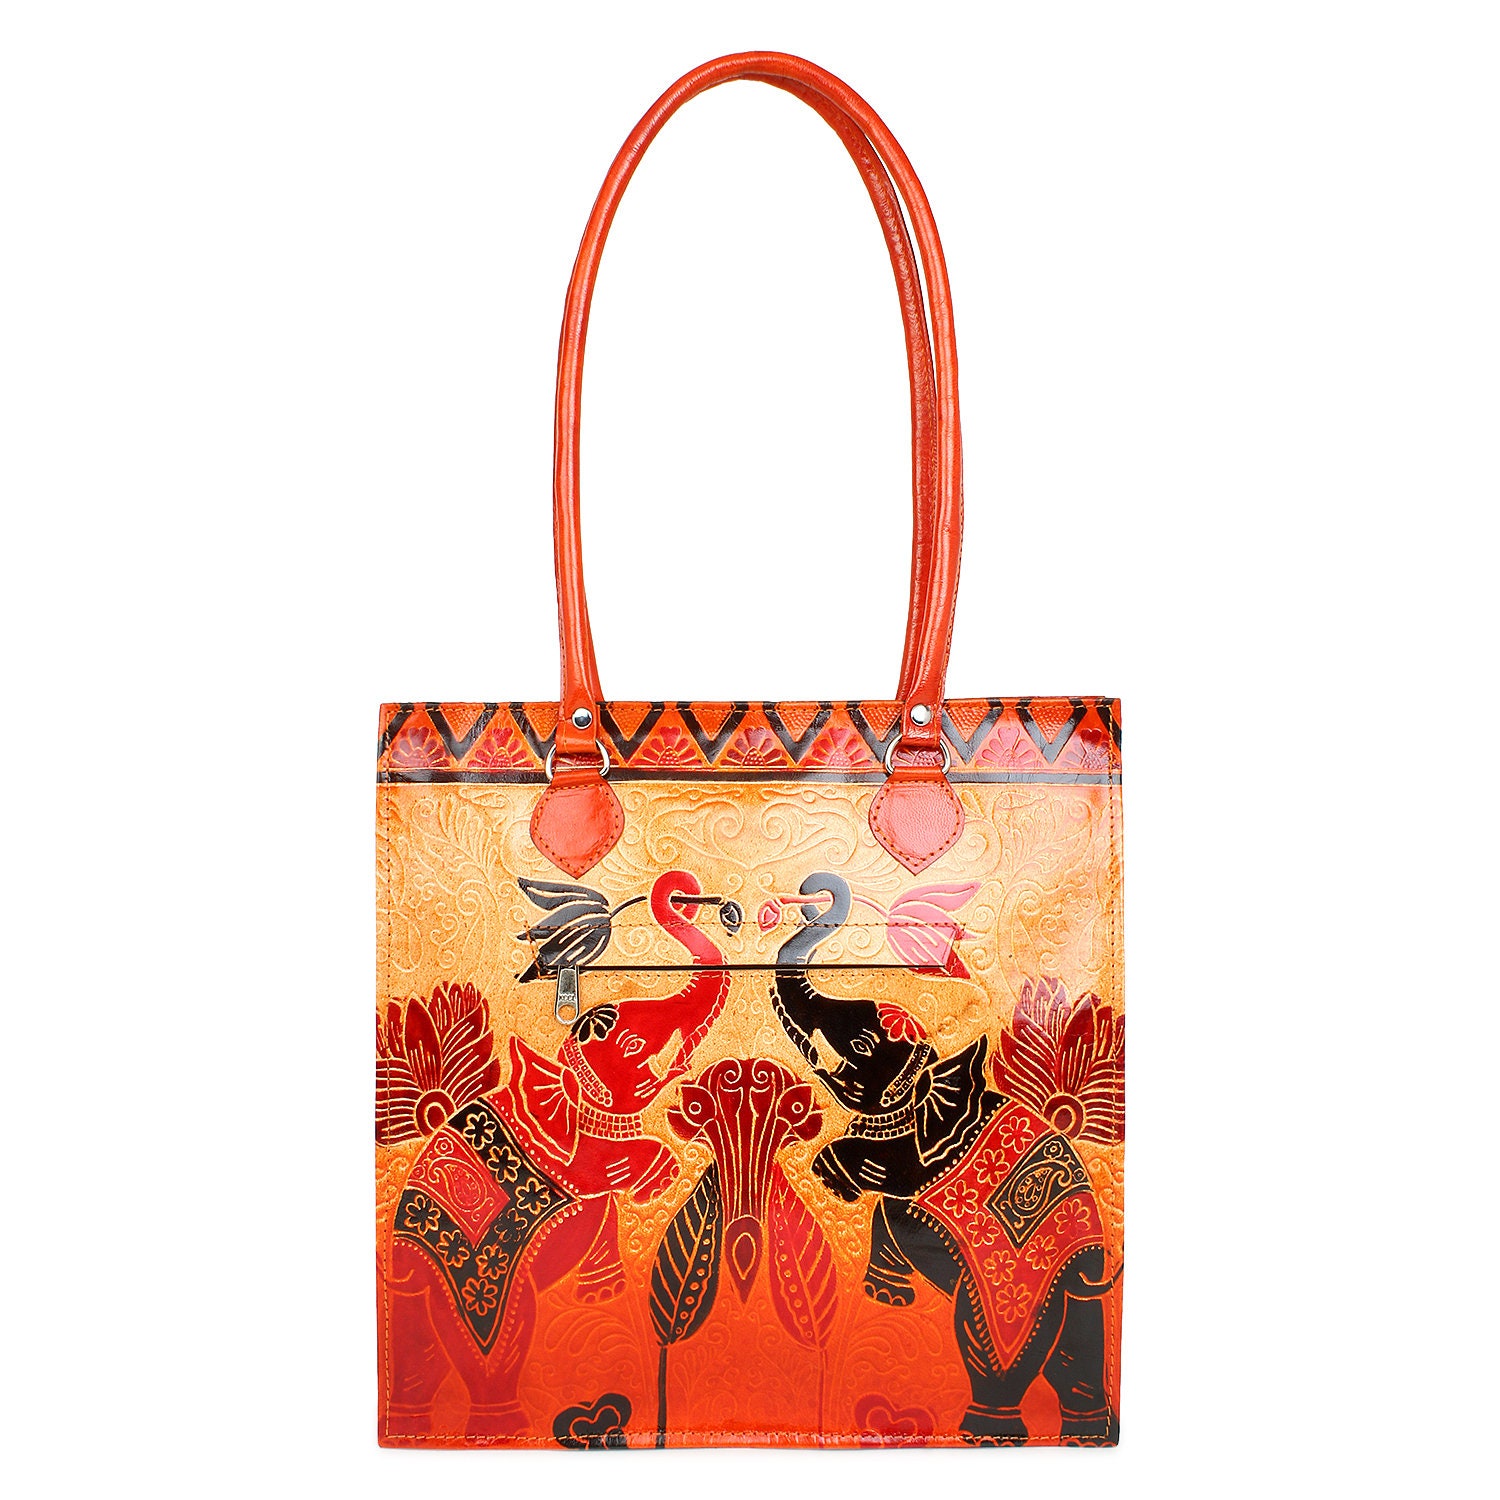 Radha Krishna Design 100% Pure leather Handmade Shantiniketan Ladies Bag  Rare | eBay